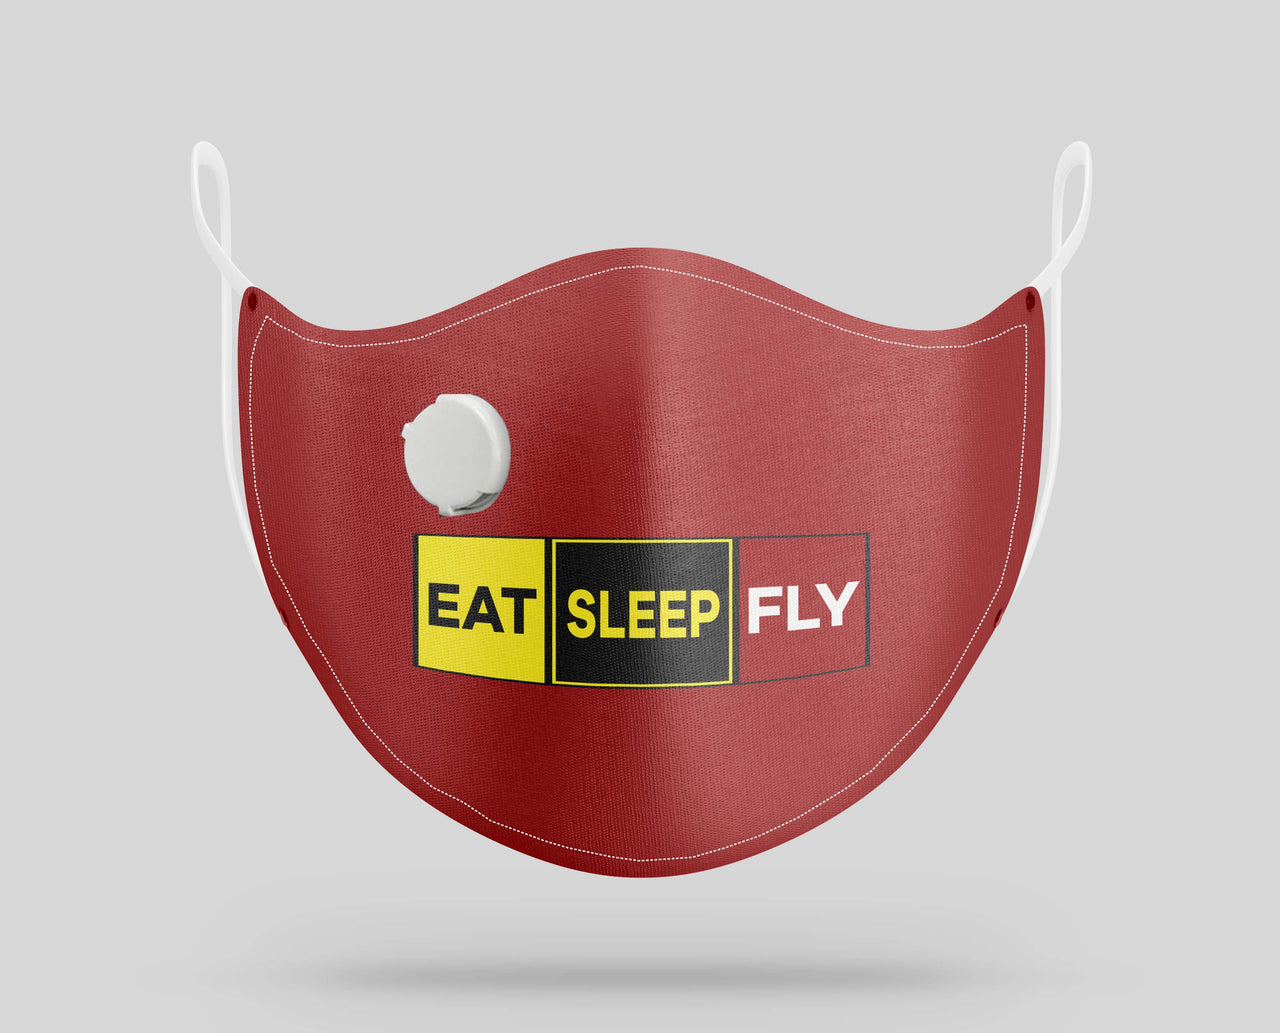 Eat Sleep Fly (Colourful) Designed Face Masks